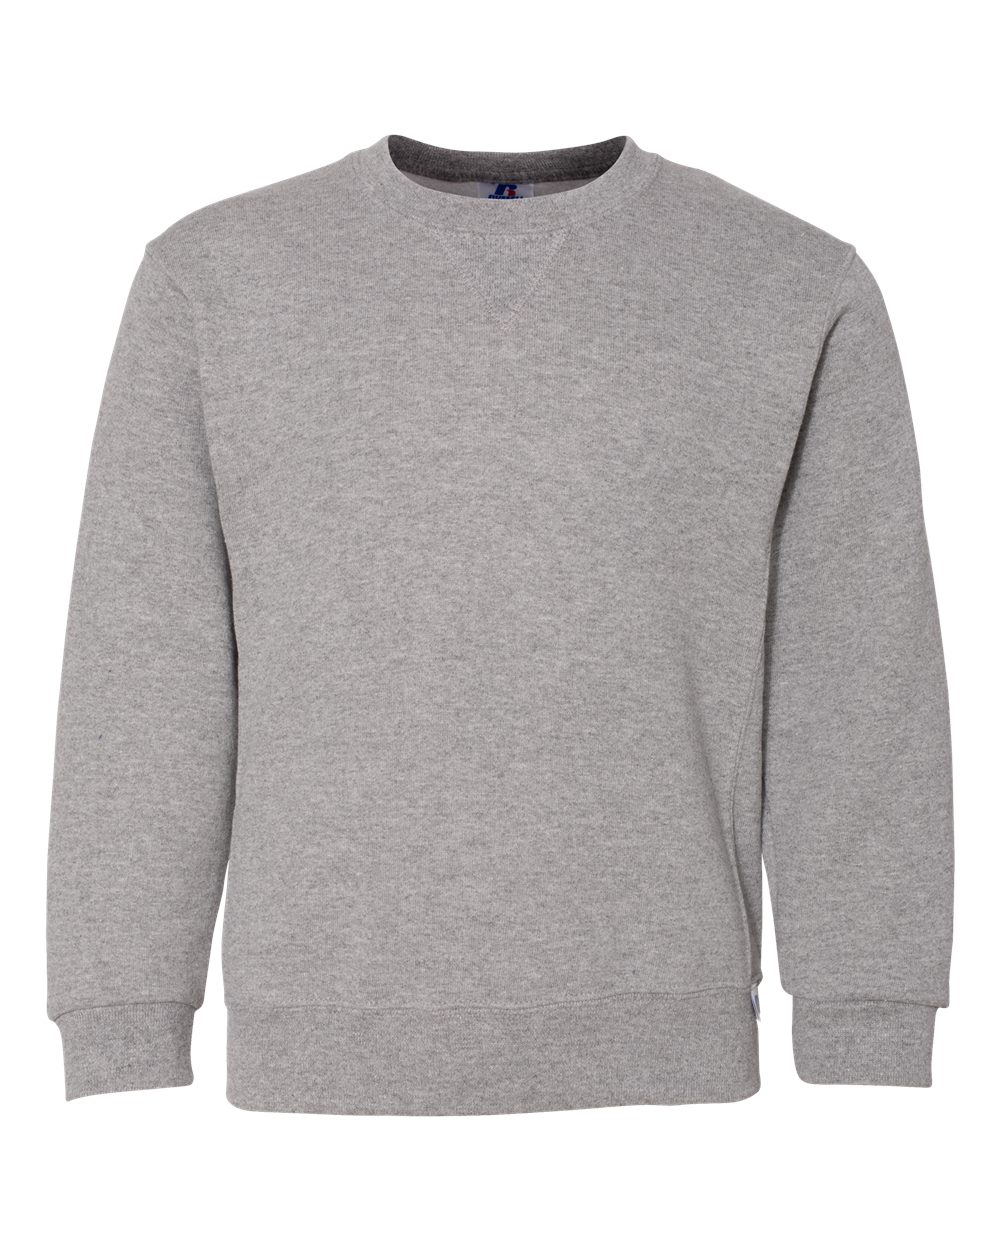 Best Crewneck Sweatshirts For Custom Printing - bulkapparel